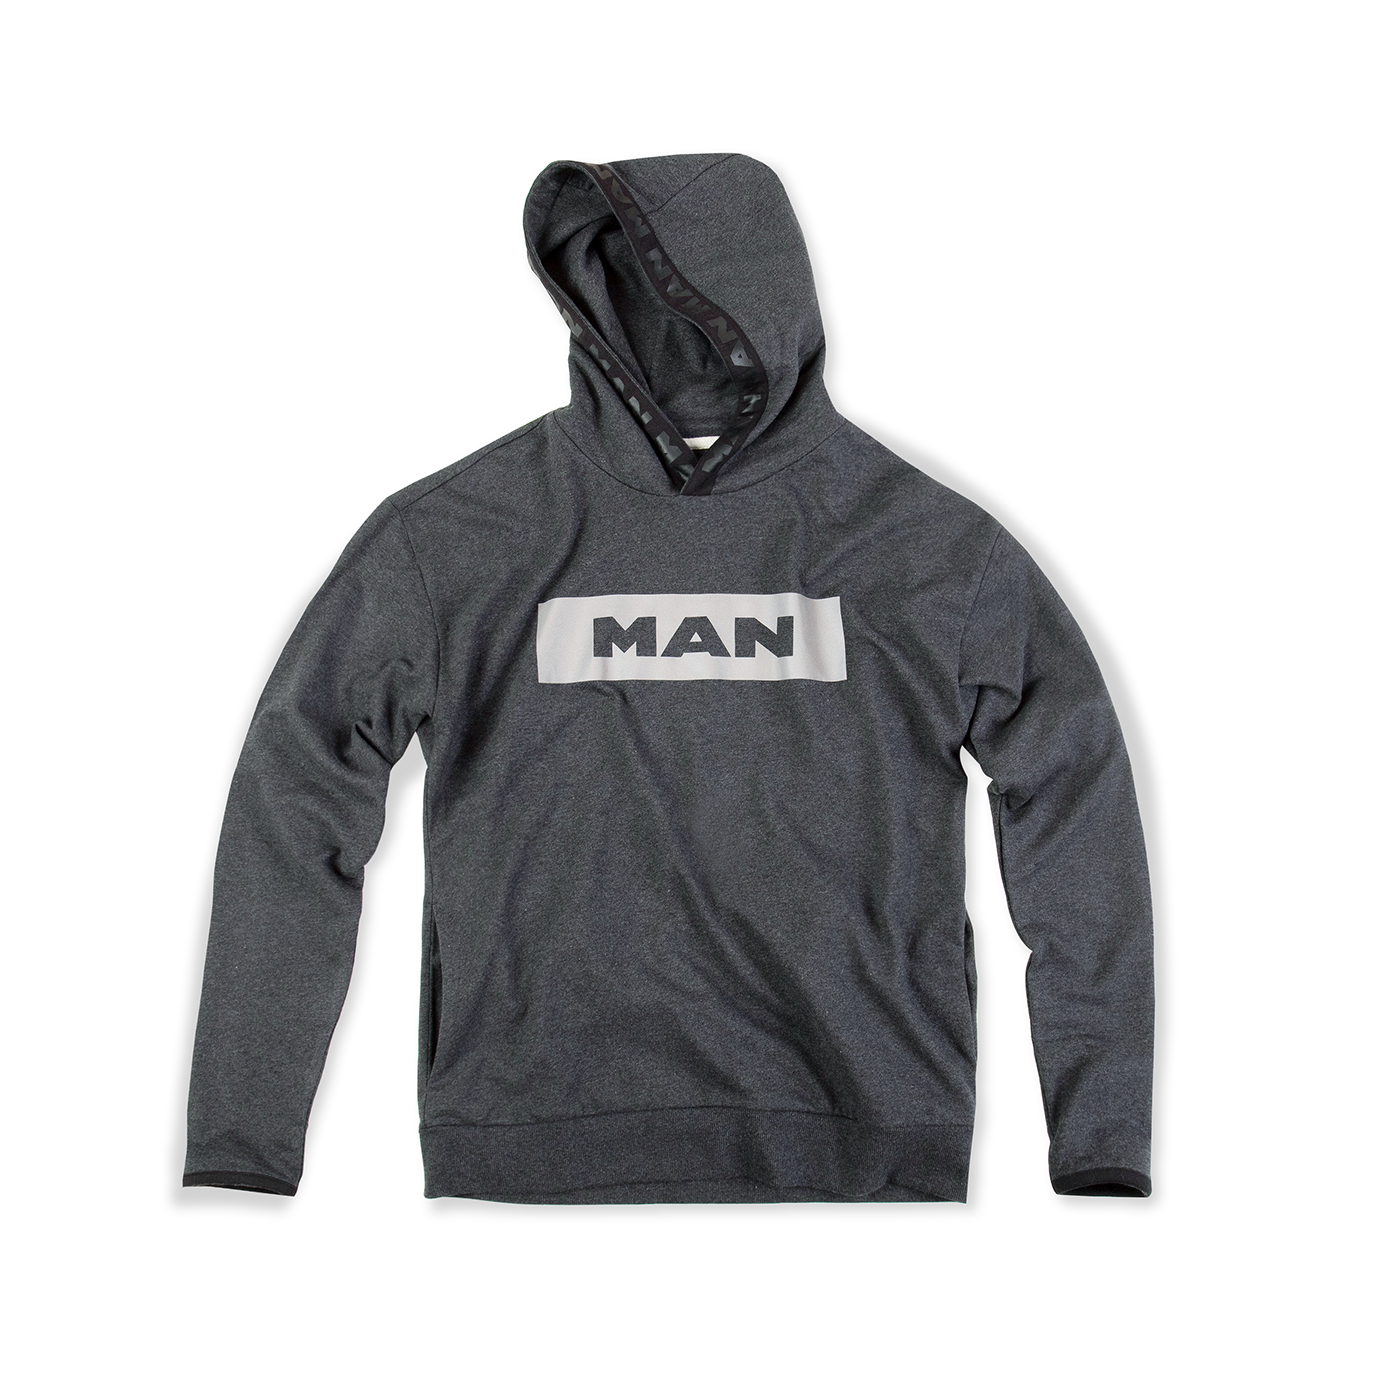 MAN Black Edition Men's sweatshirt